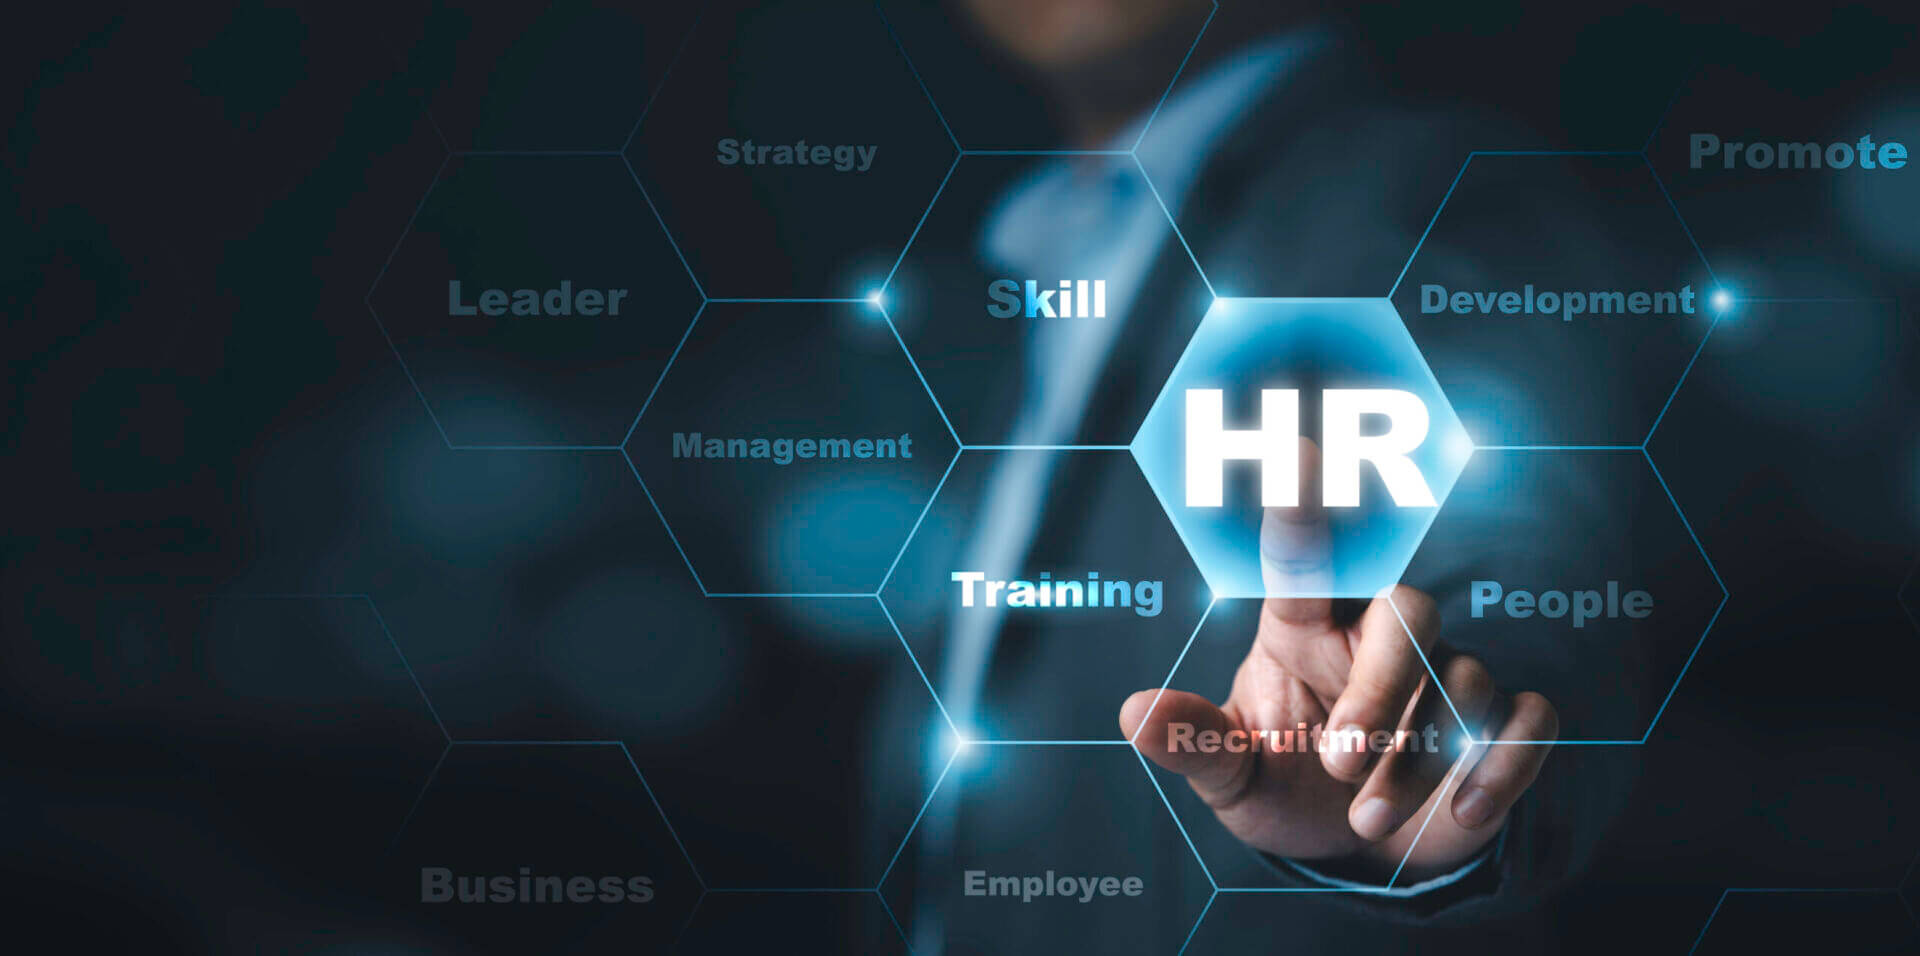 Apex HCM human resources, workforce management software tools